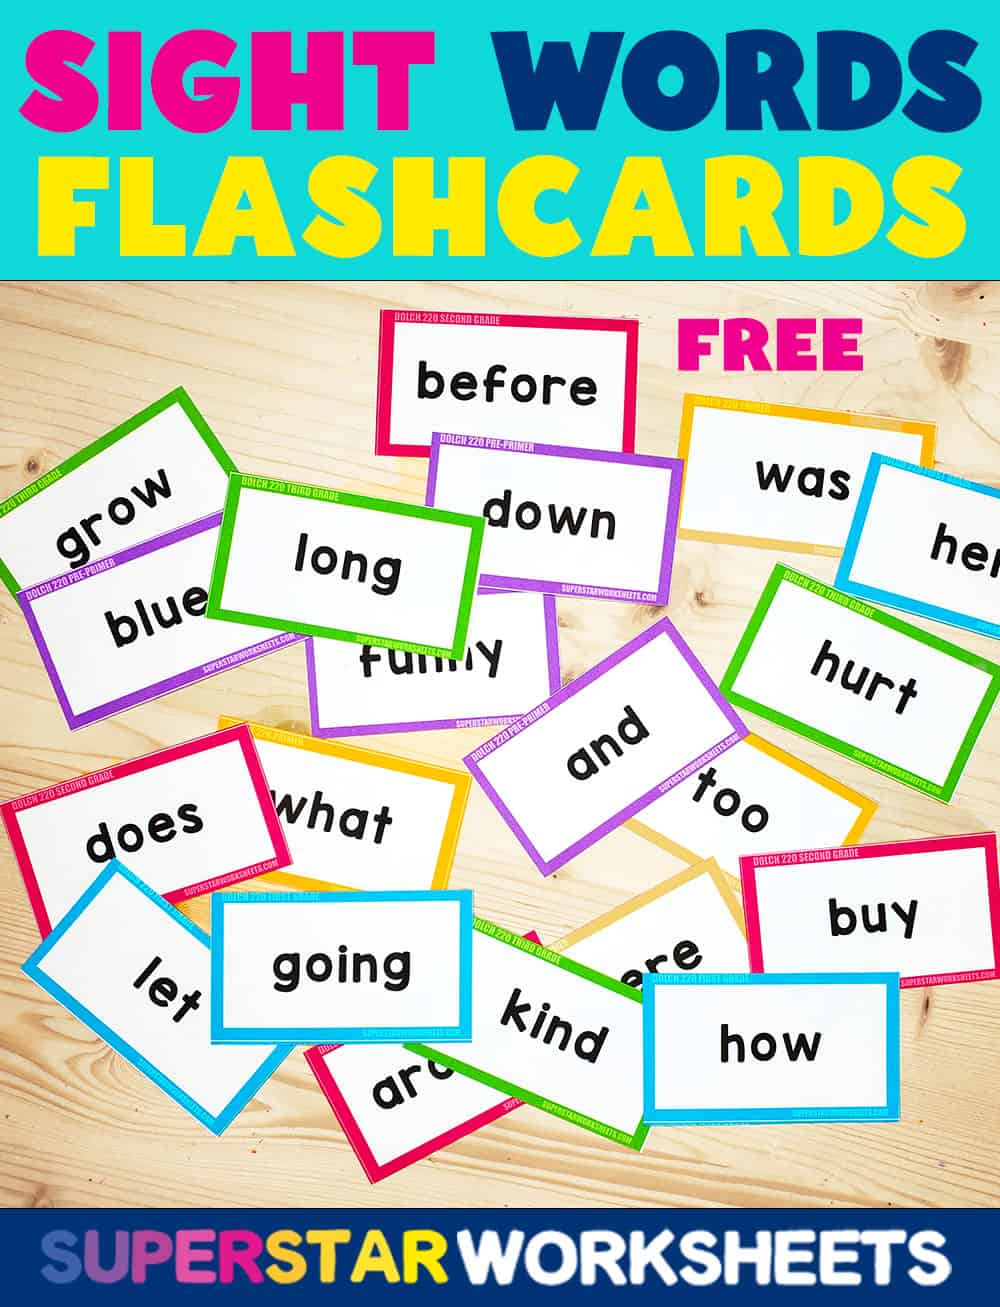 sight-word-flashcards-superstar-worksheets